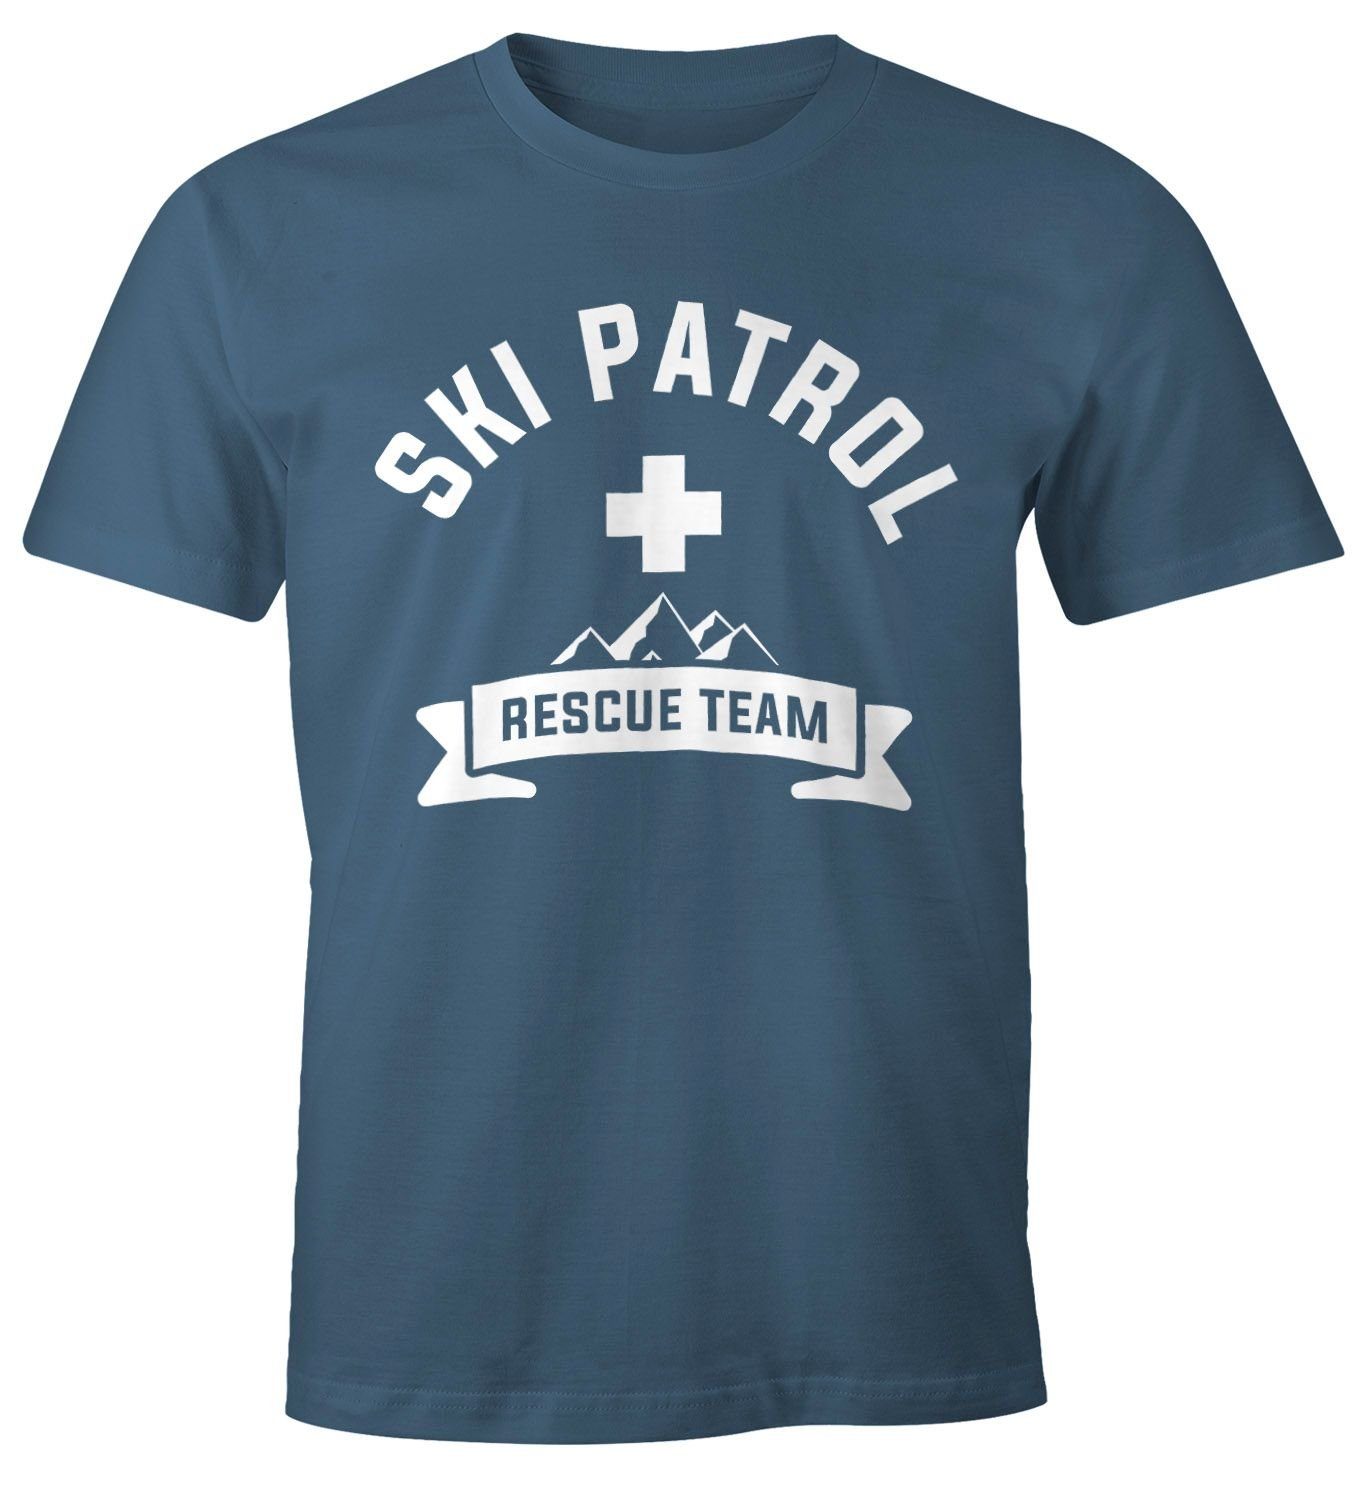 Print-Shirt Apres-Ski Patrol Fun-Shirt Herren Moonworks® blau Print Team MoonWorks Rescue mit T-Shirt